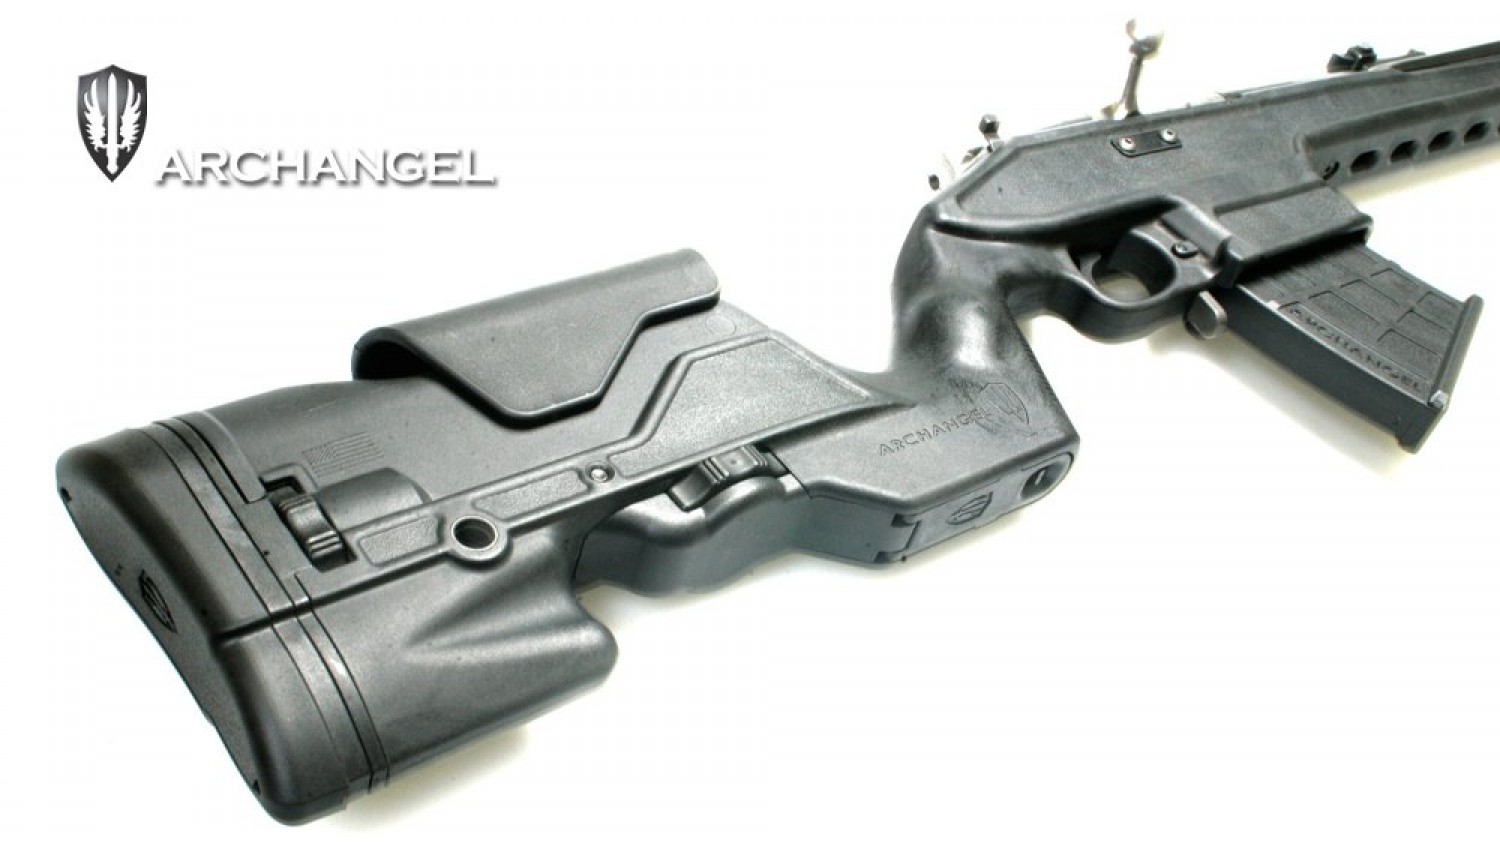 Archangel Detachable Magazine Conversion Stock for Mosin Nagant Rifles.